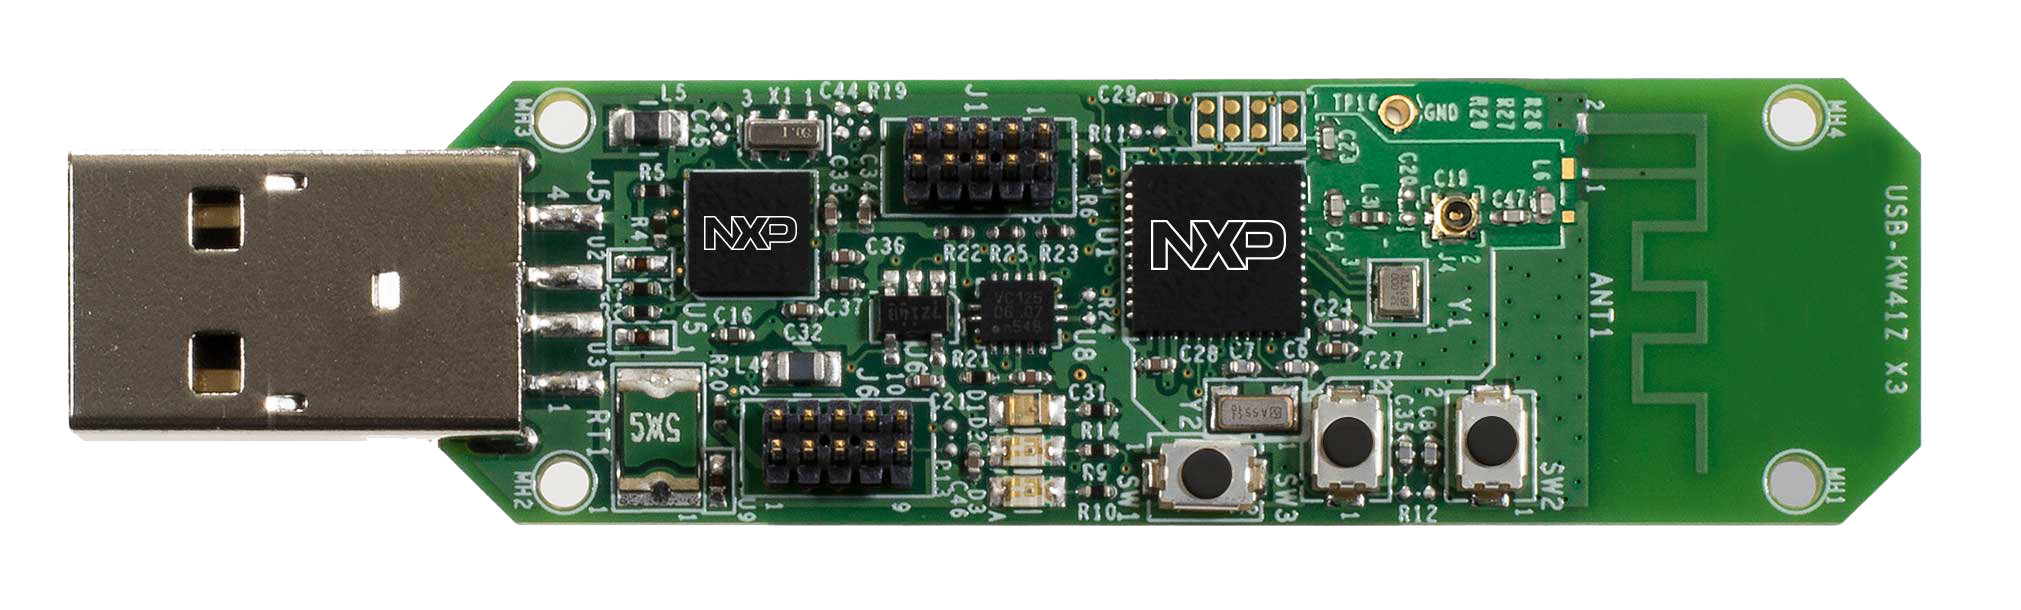 NXP KW41Z 系列